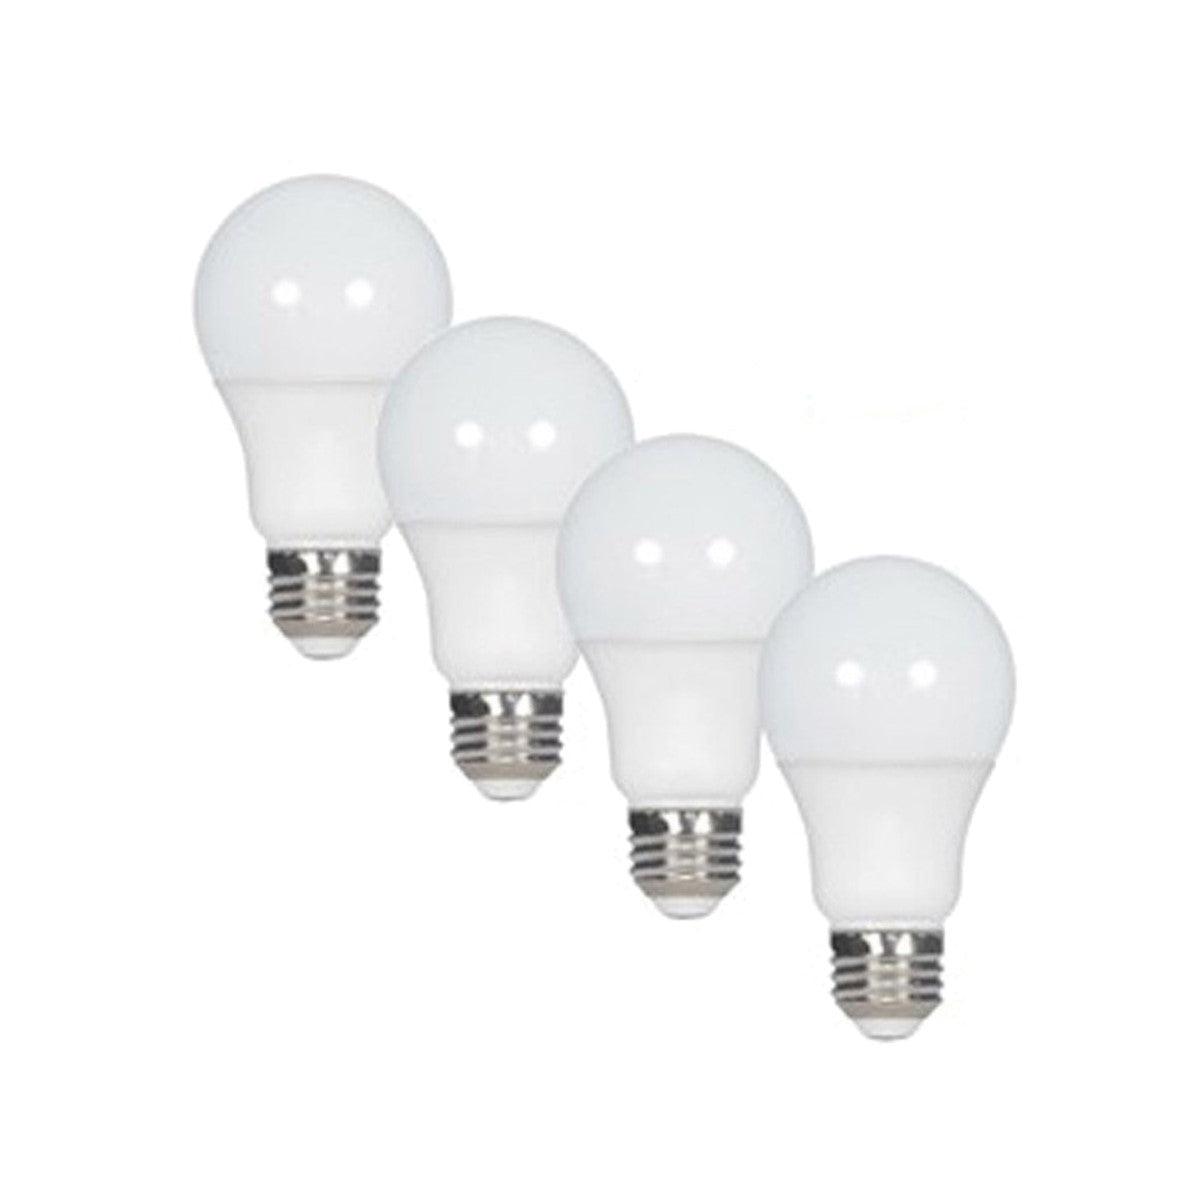 A19 LED Bulb, 100W Equivalent, 16 Watt, 1490 Lumens, 5000K, E26 Medium Base, Frosted Finish, Pack Of 4